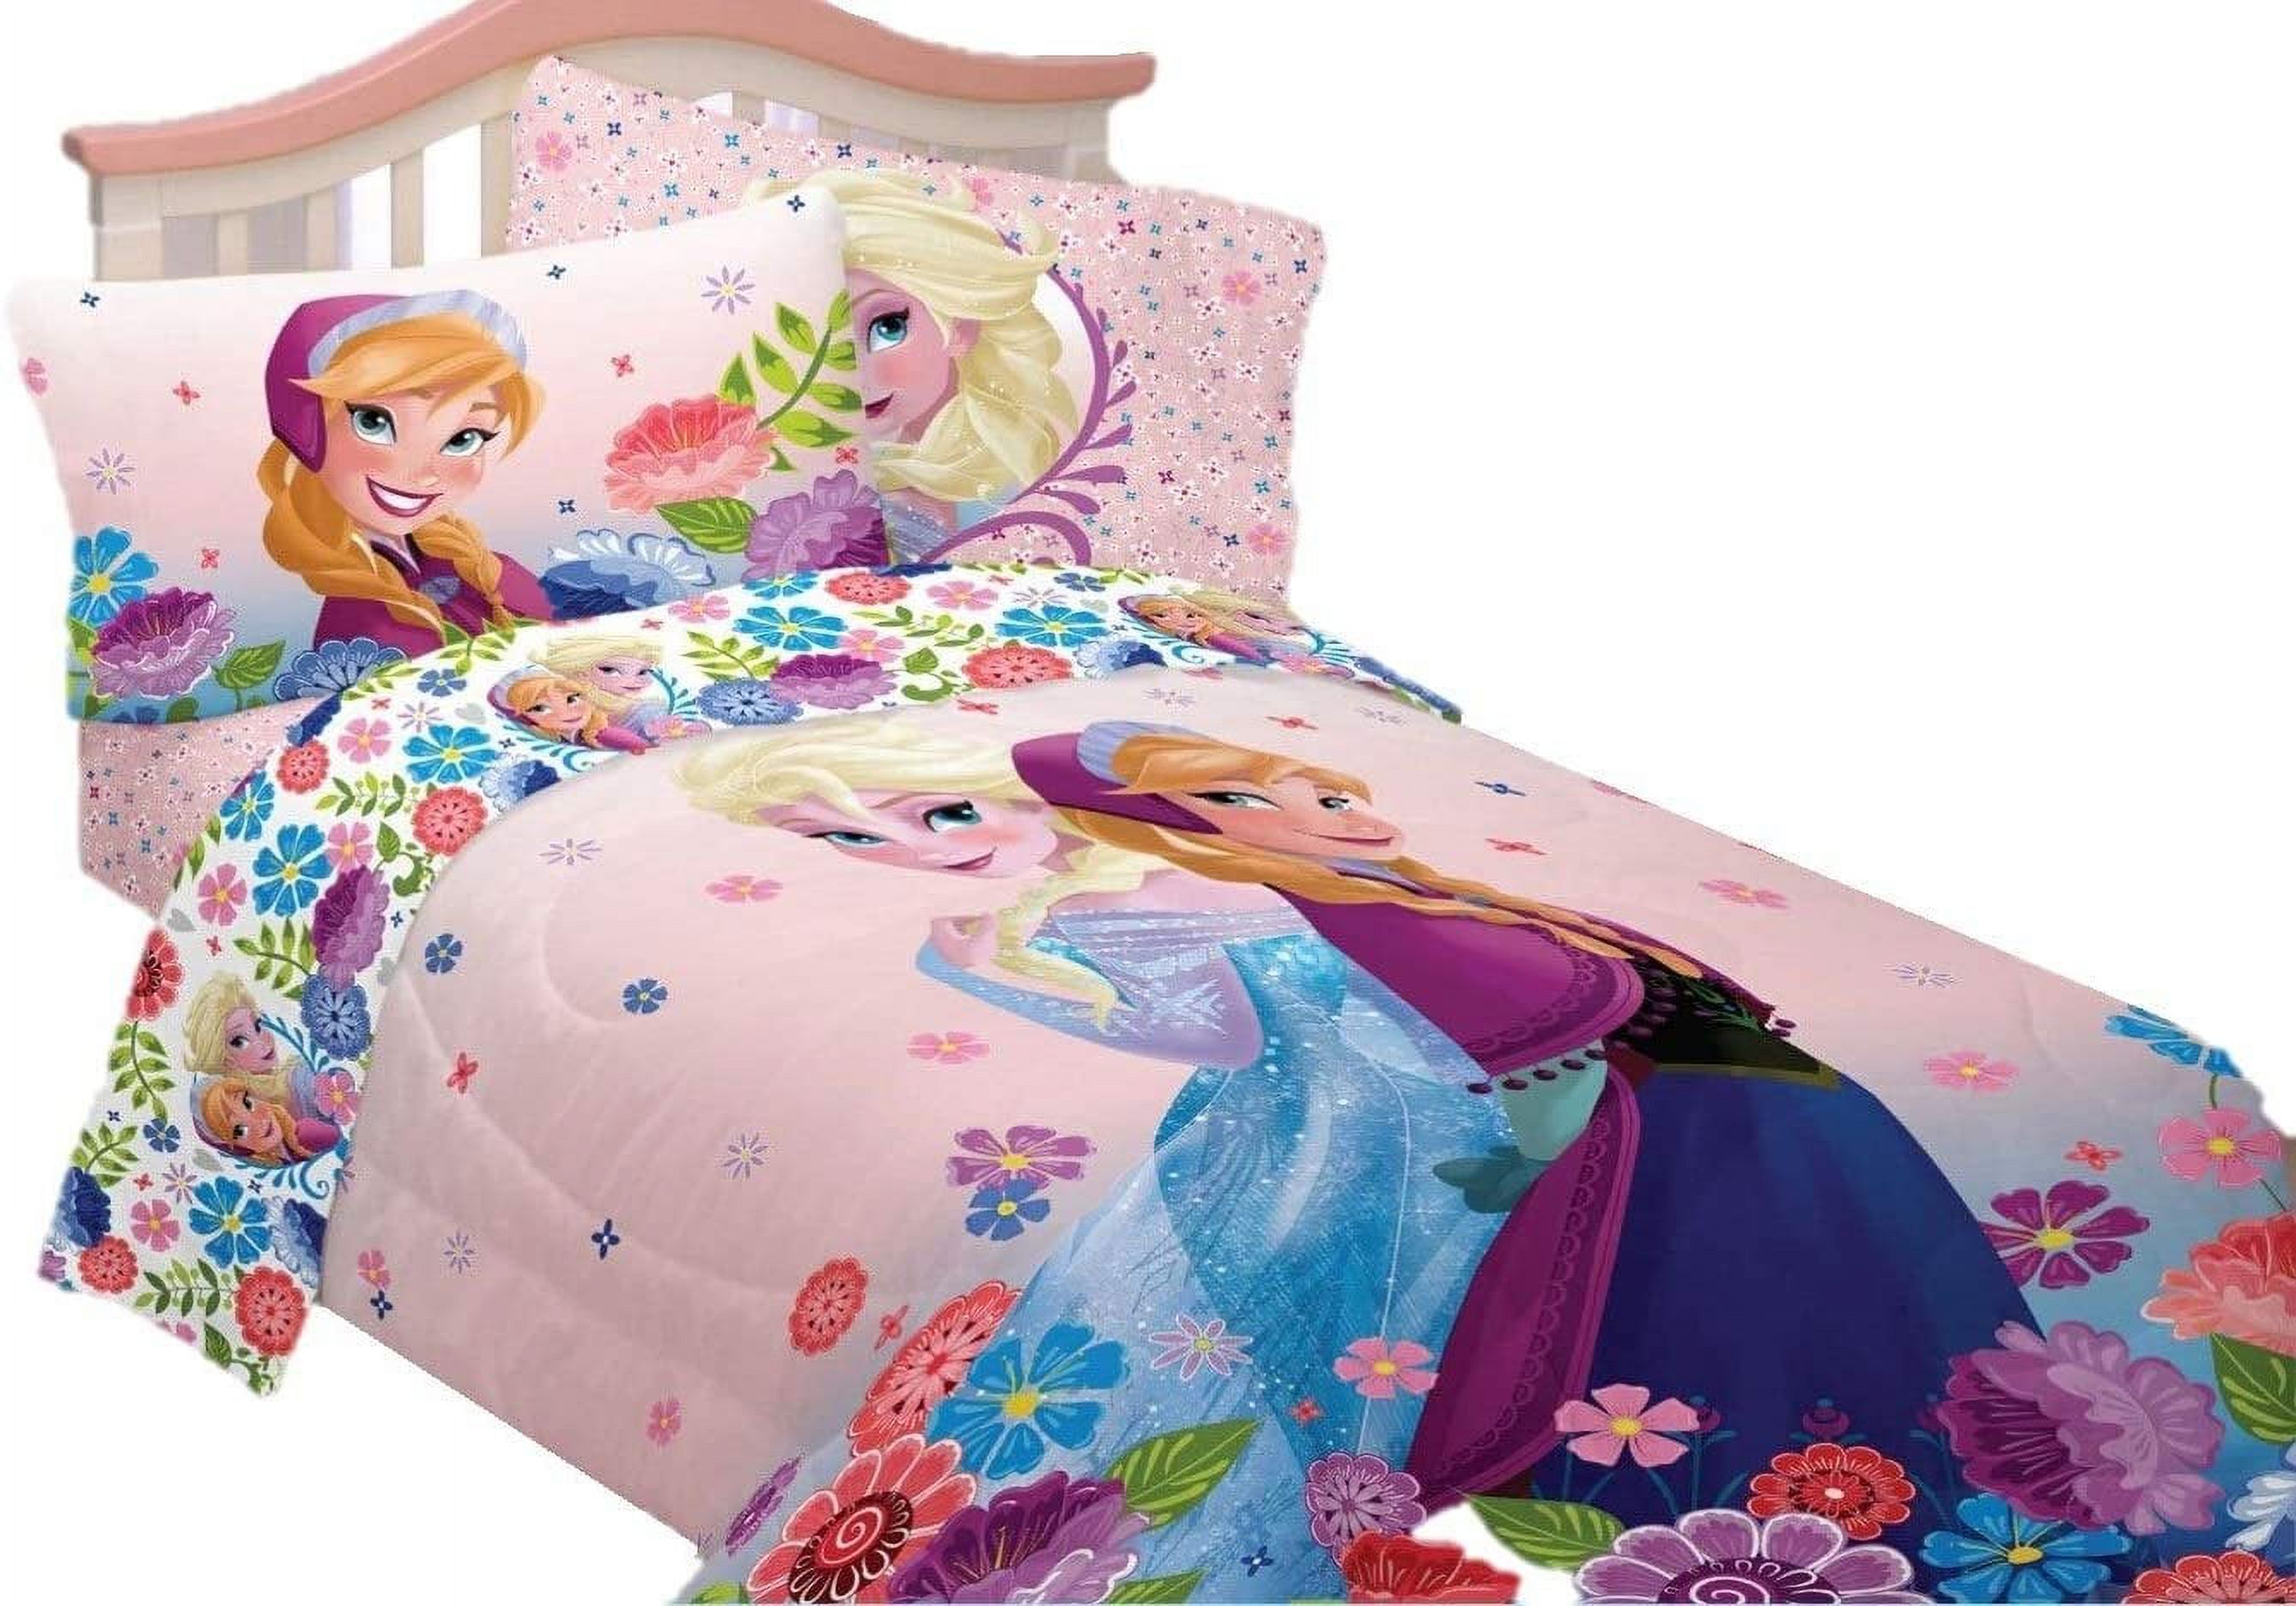 Disney Frozen Floral Breeze Twin Full Pink Reversible Bedding Comforter, 1 Each - image 1 of 2